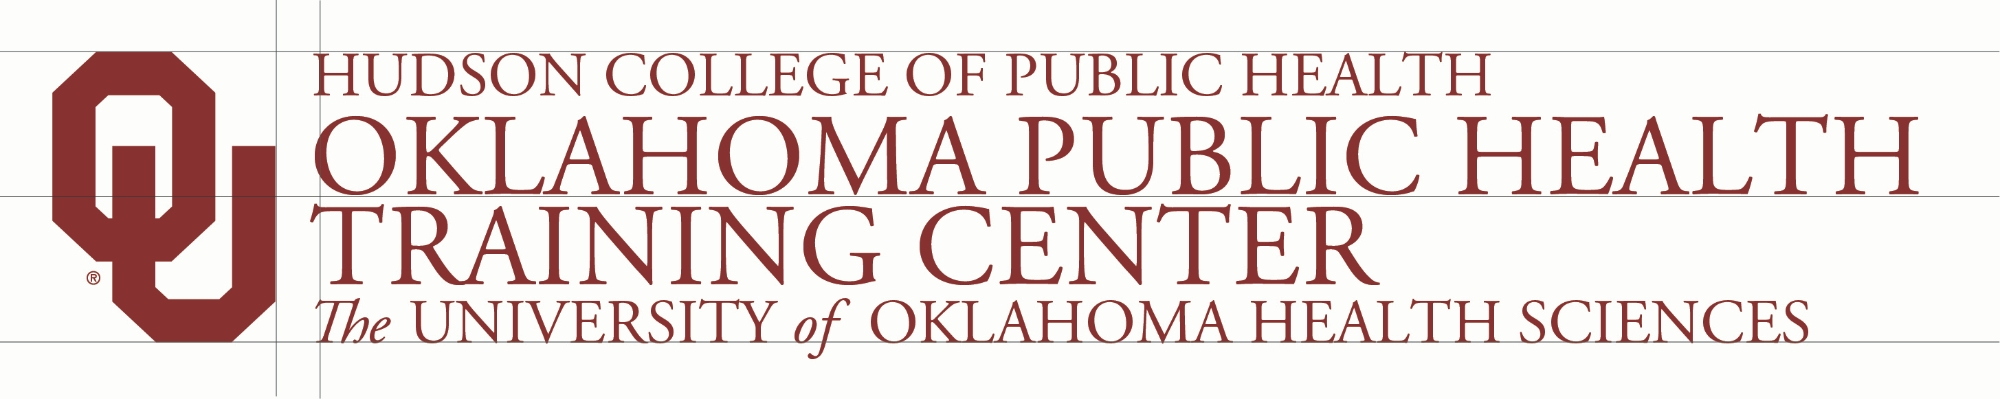 Interlocking OU, Hudson College of Public Health, Oklahoma Public Health Training Center, The University of Oklahoma Health Sciences wordmark, four-line example.